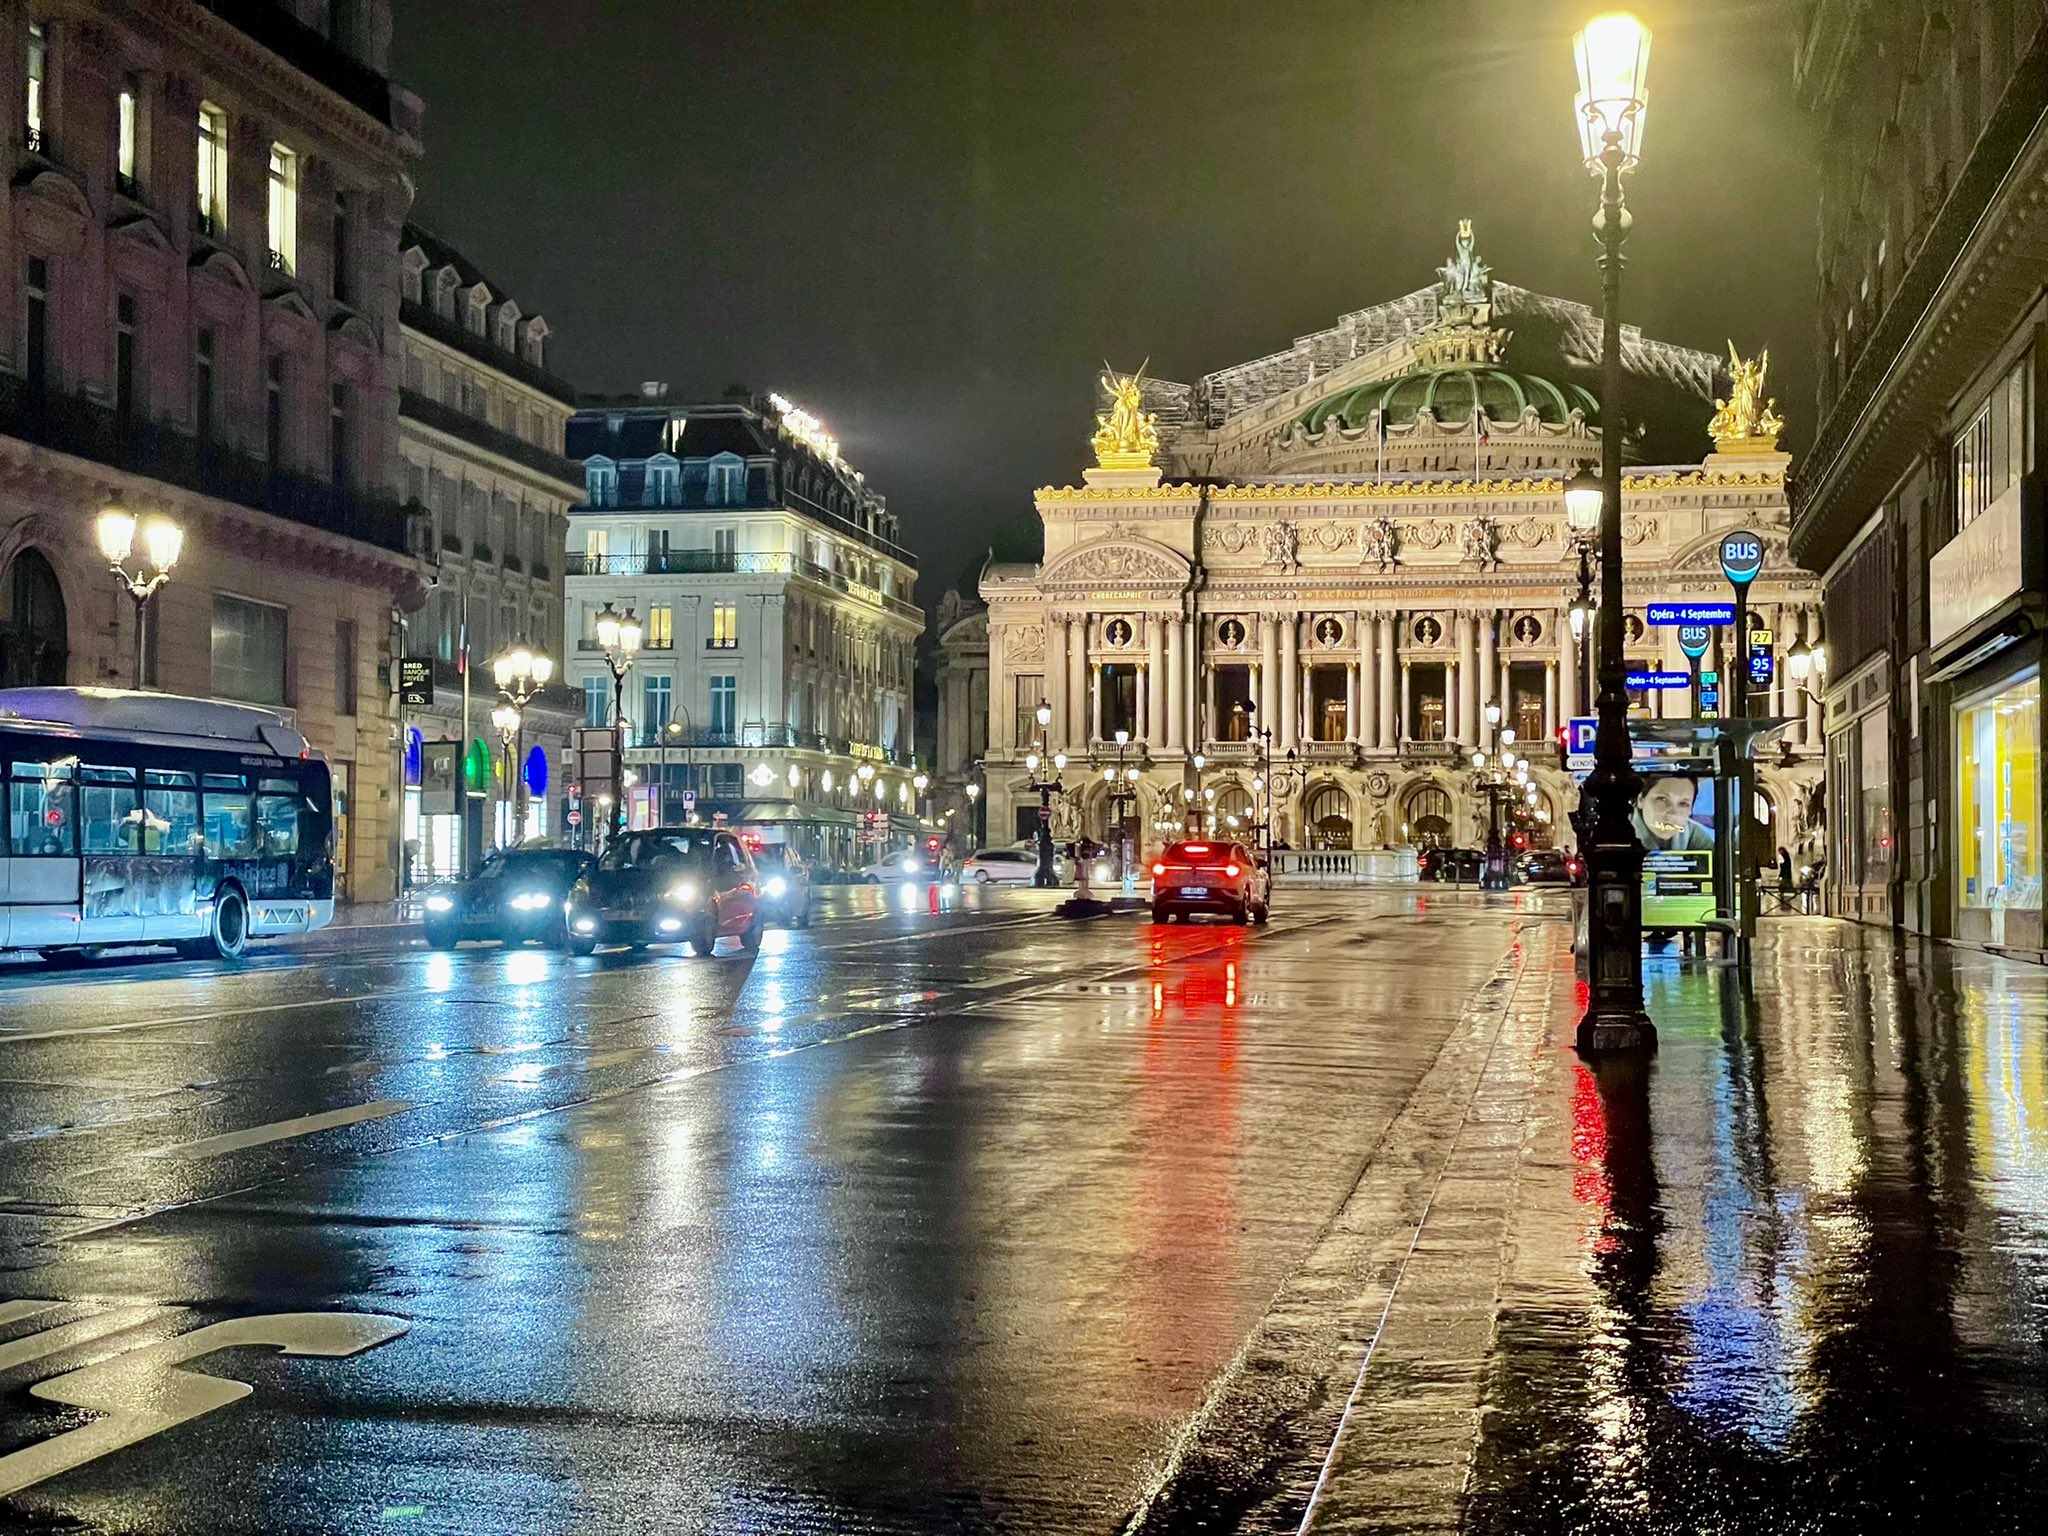 You've not seen Paris unless you've seen it in the rain